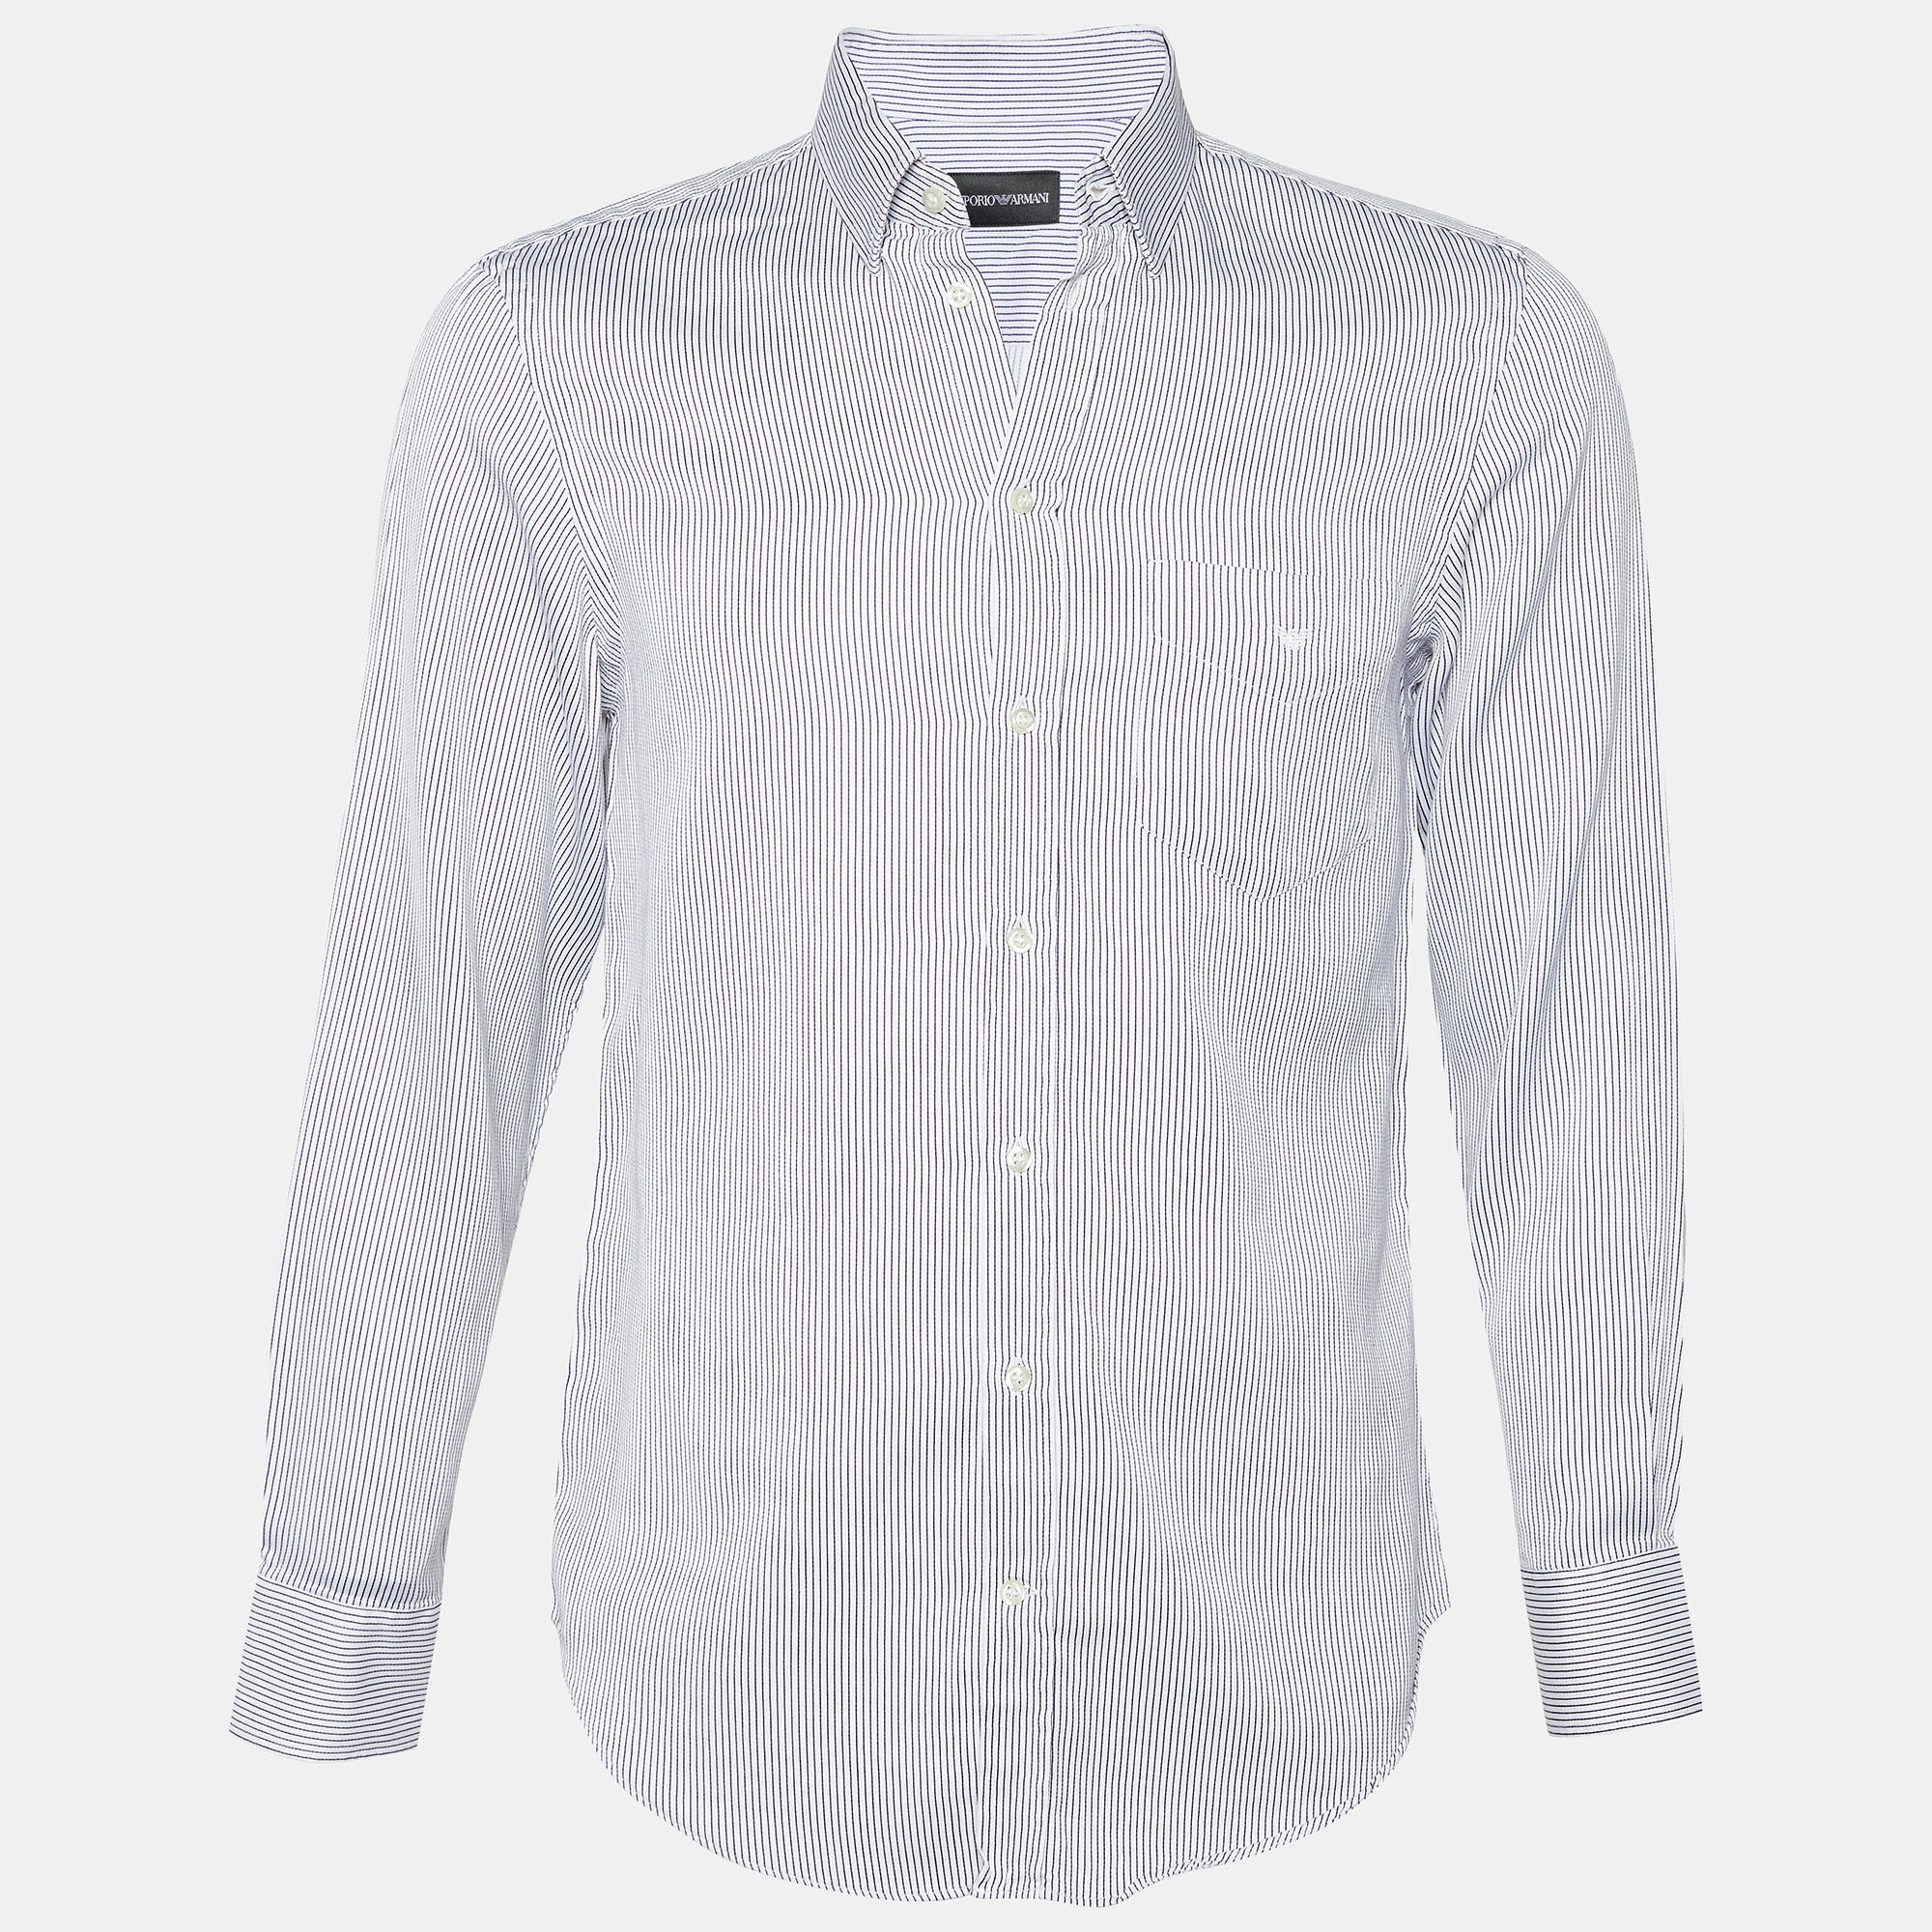 Emporio Armani White & Blue Striped Cotton Button Front Shirt M